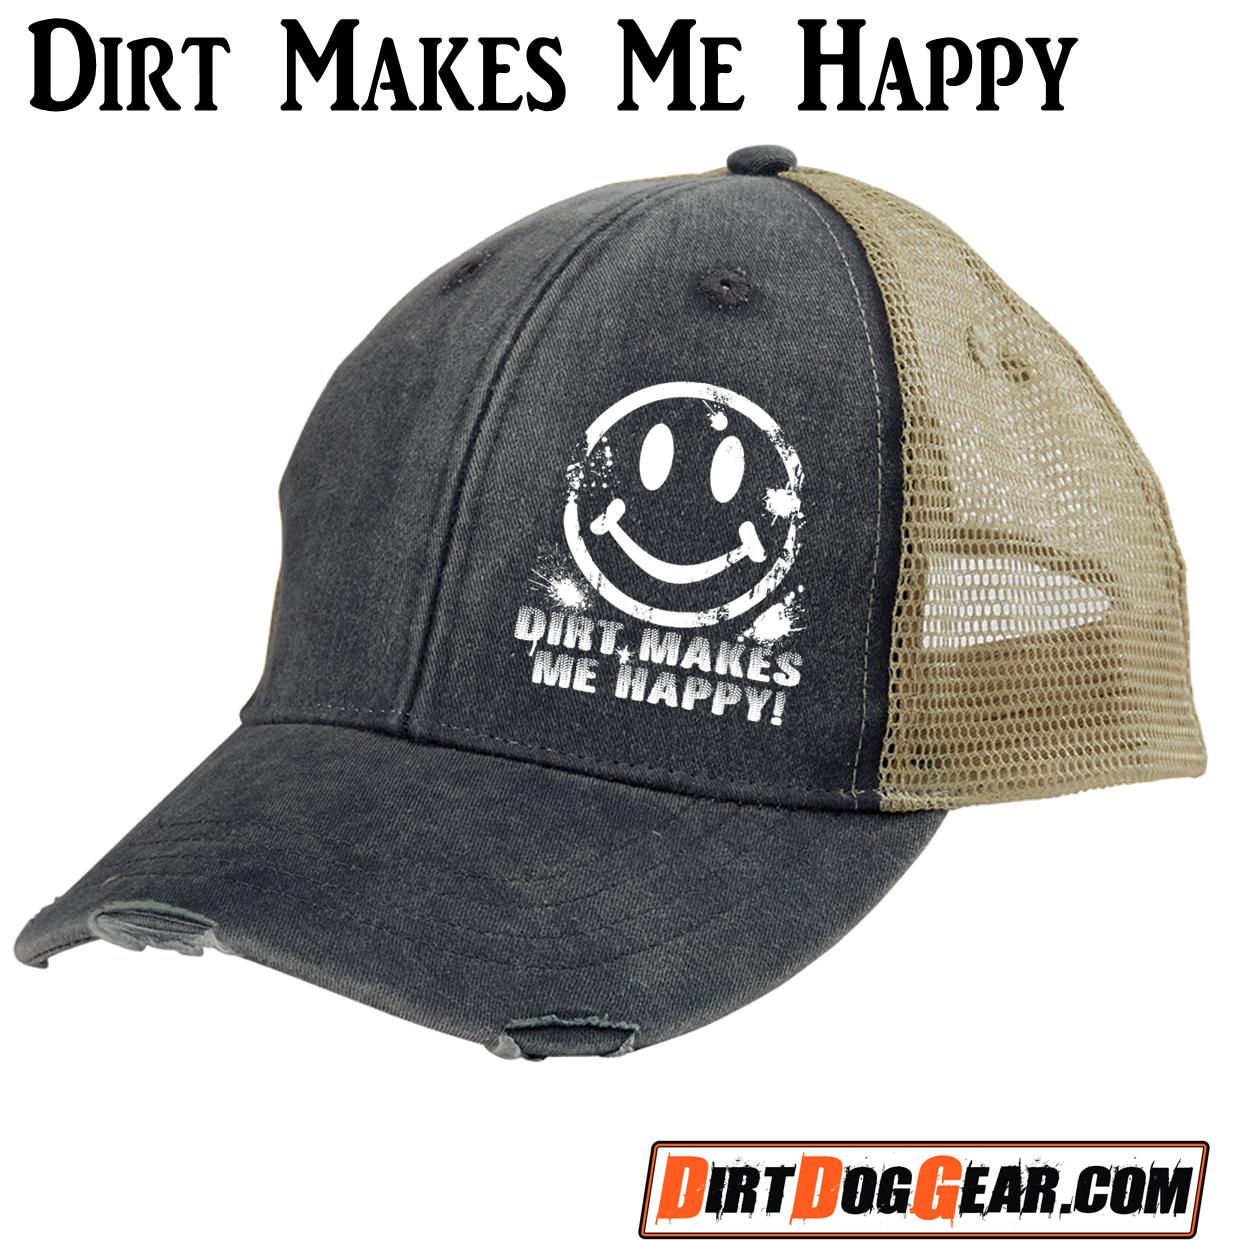 Hat 1 - Distressed Trucker Snapback